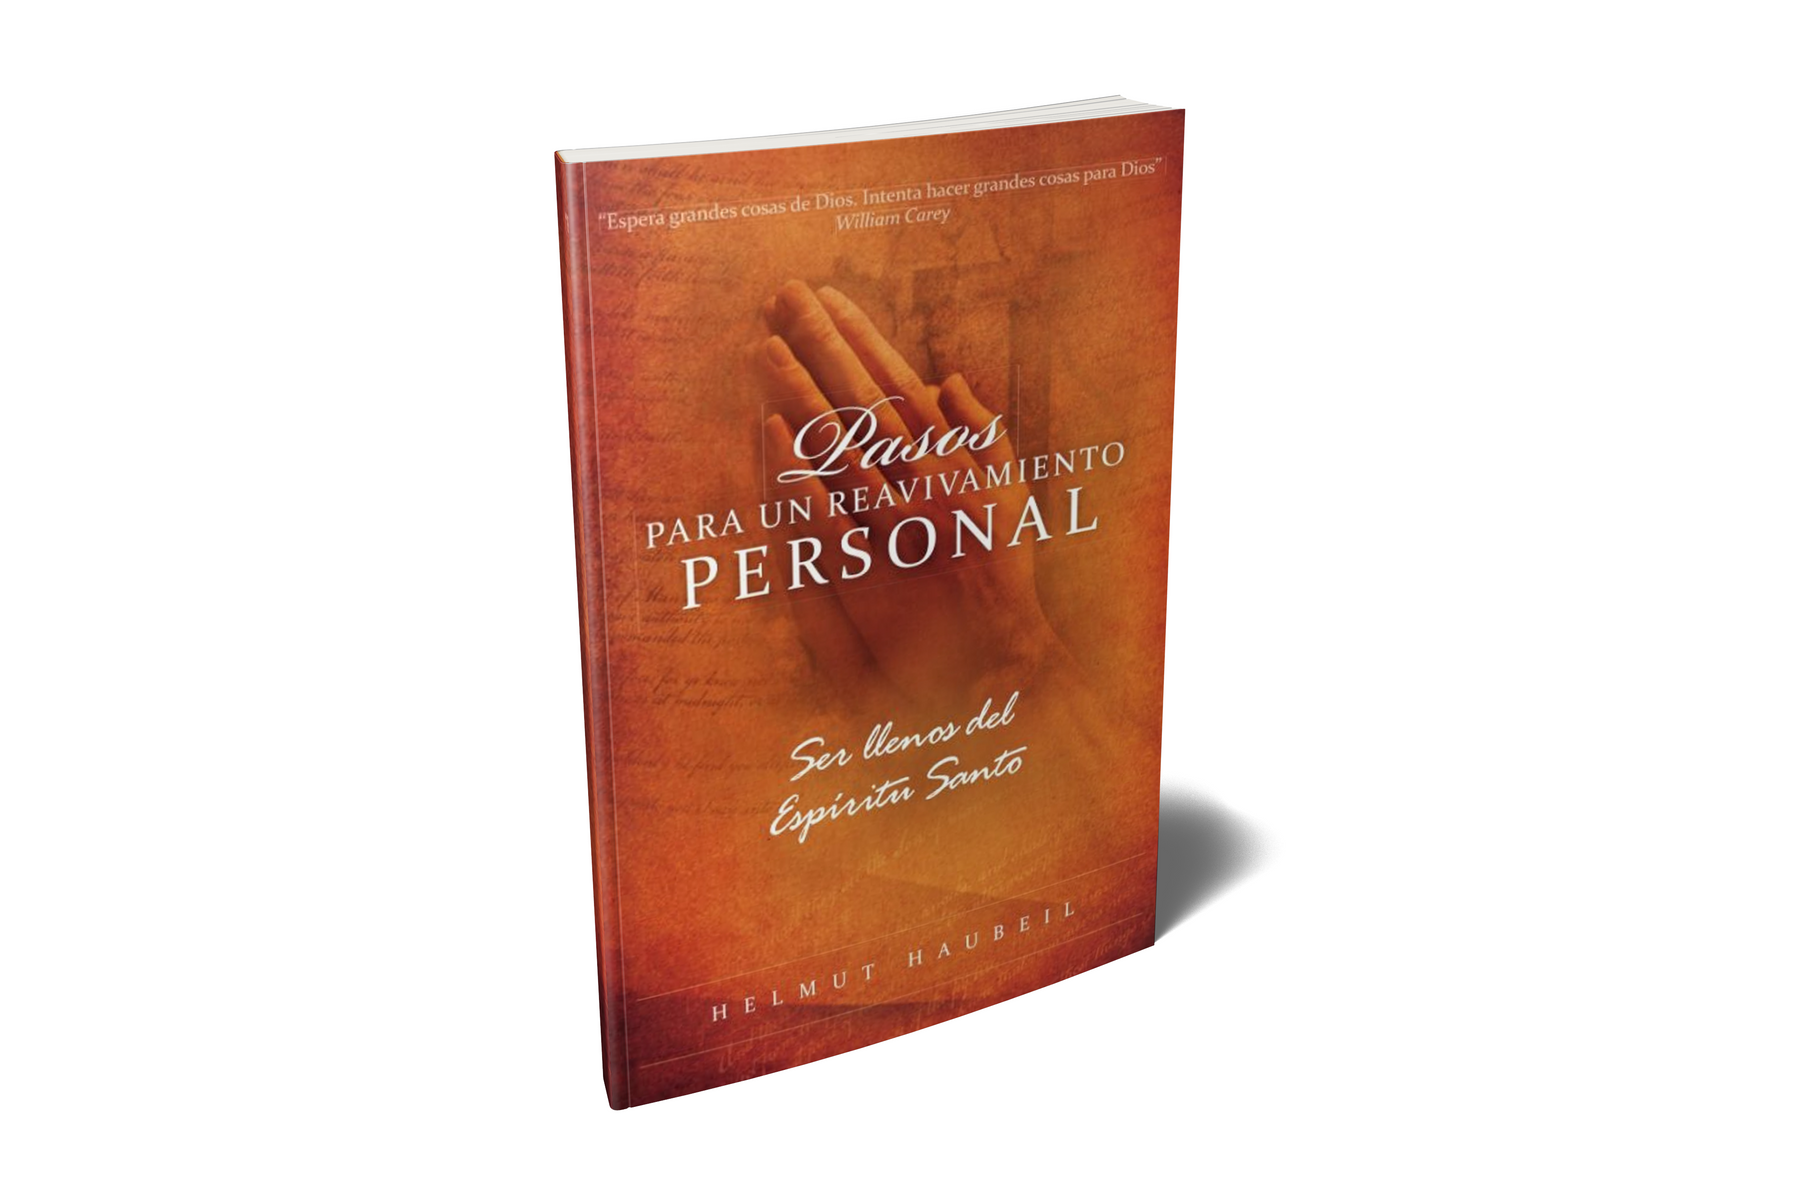 Pasos Para un Reavivamiento Personal (Steps to Personal Revival - Spanish) by Helmut Haubeil